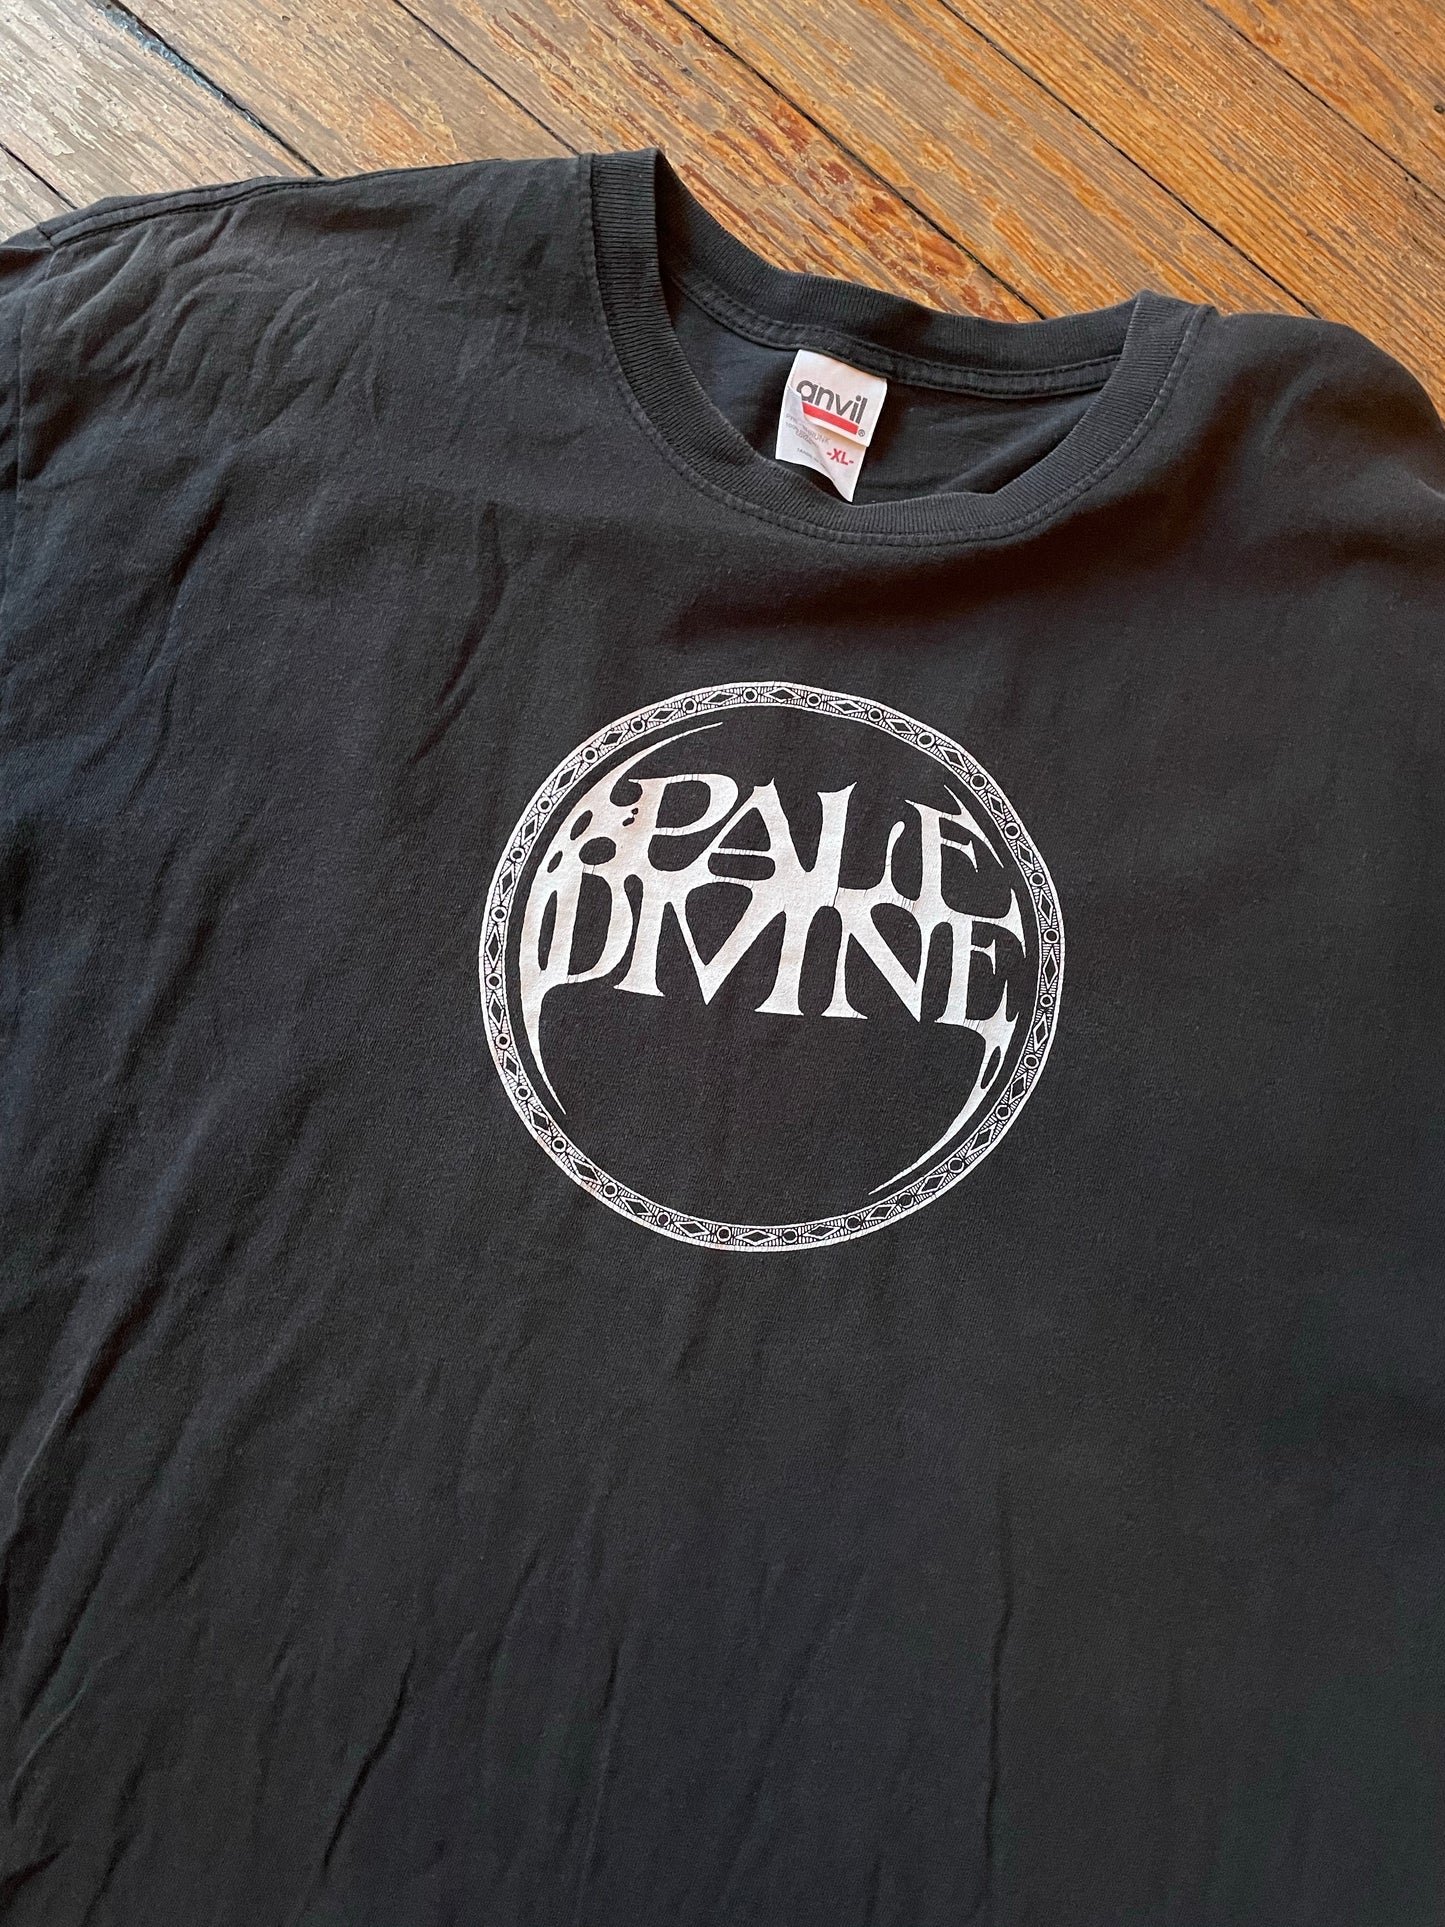 Vintage Pale Divine Doom Metal T-Shirt